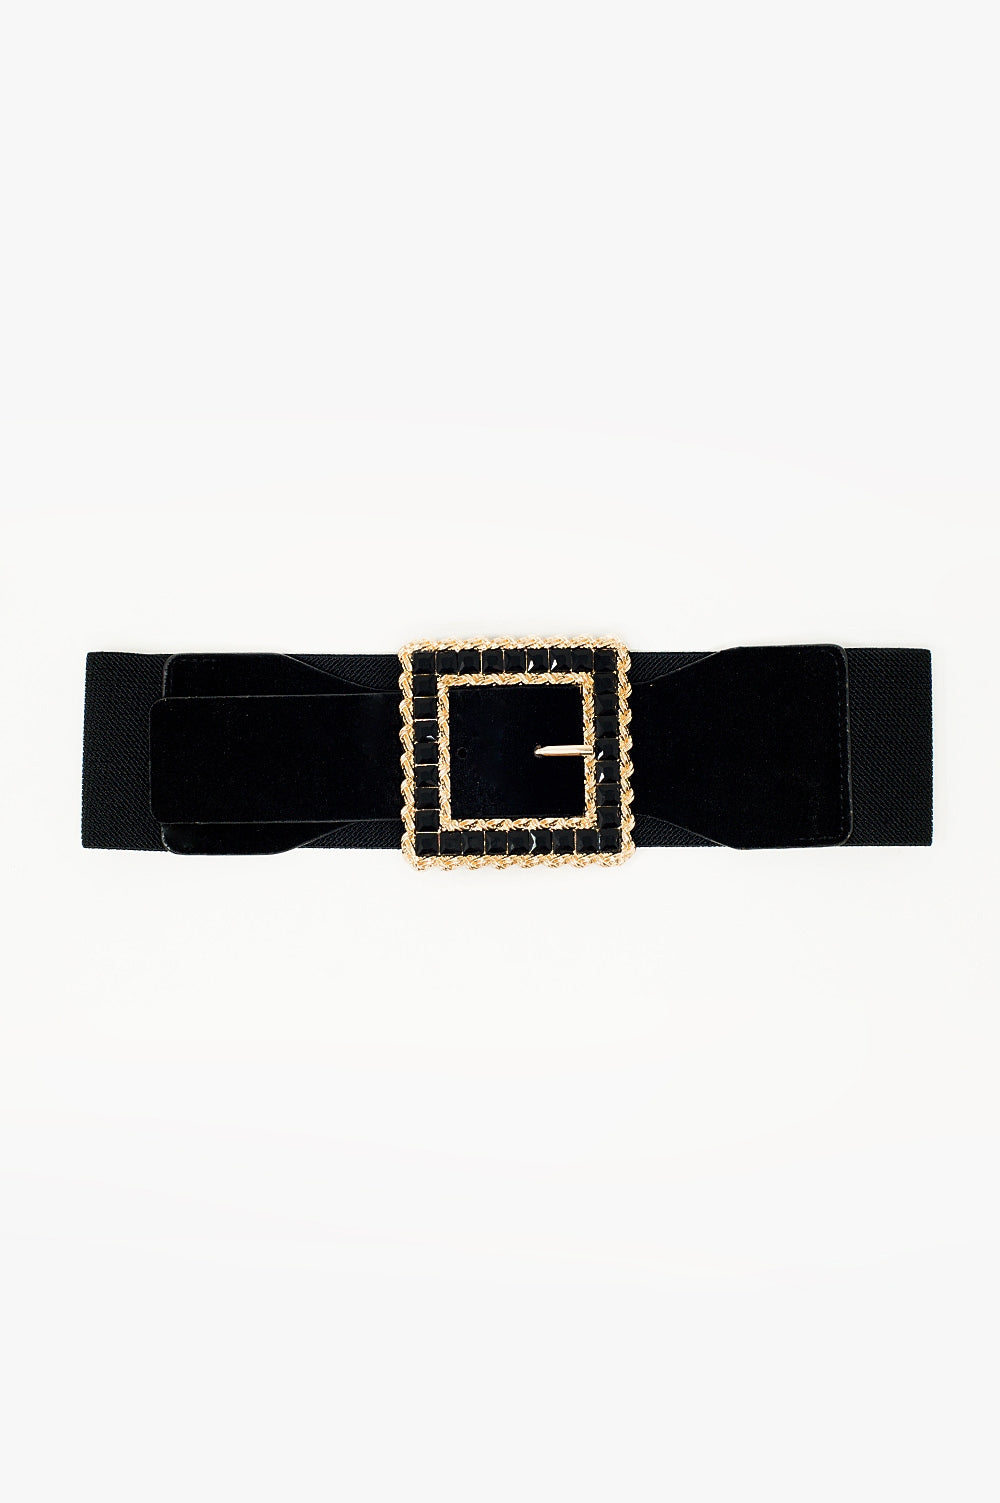 Cintura quadrata nera con strass ed elastico regolabile